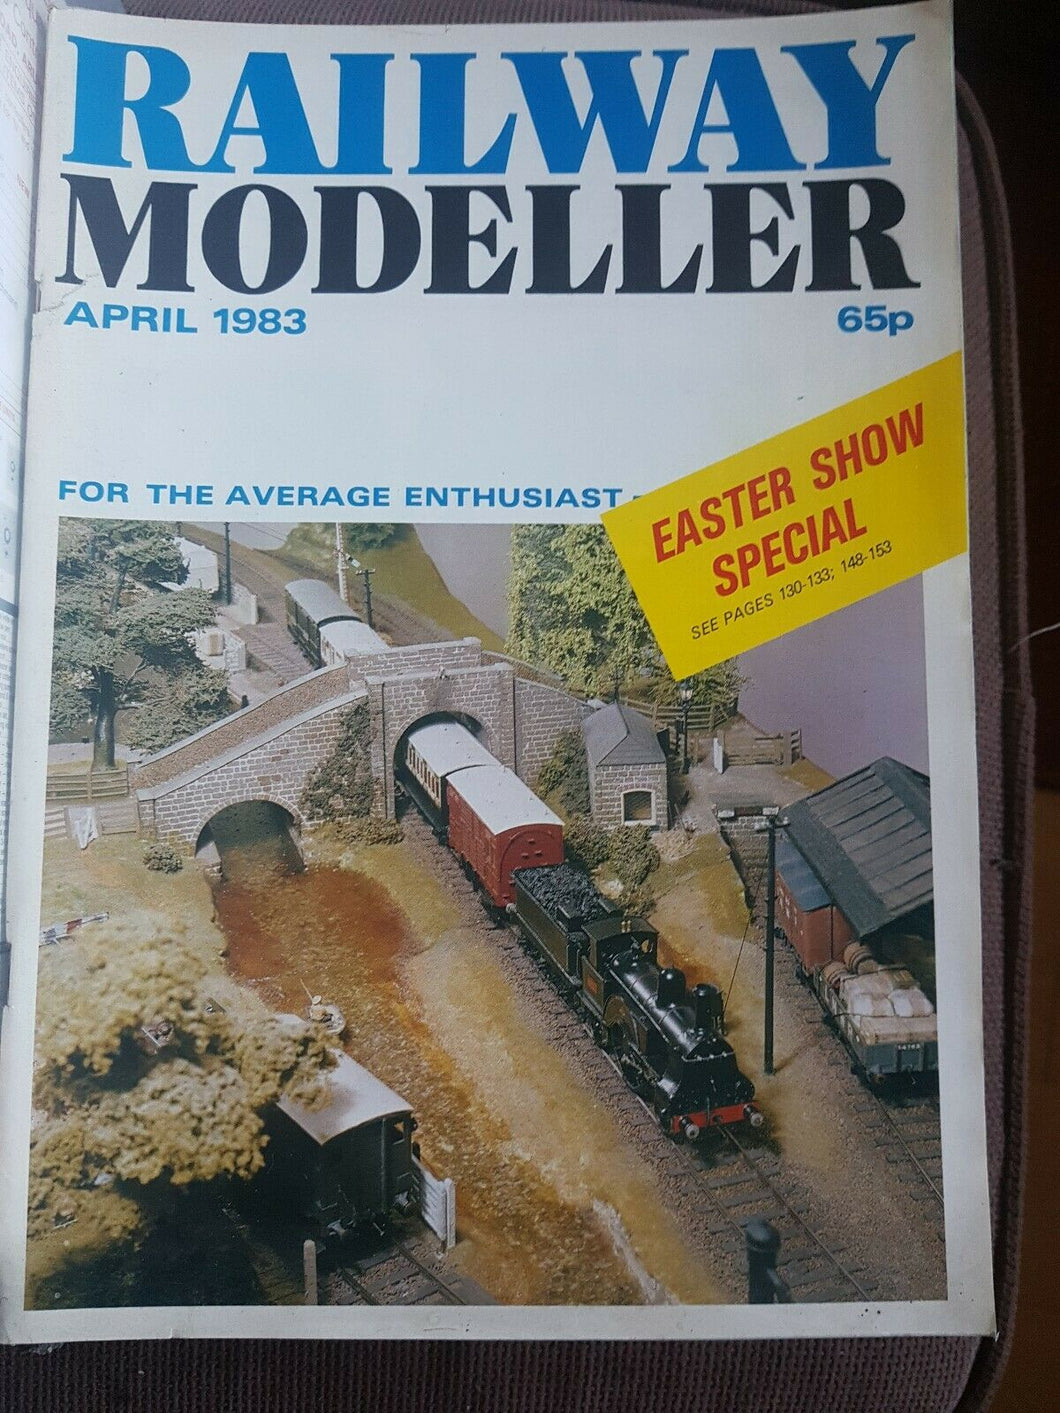 Railway modeller magazine April 1983